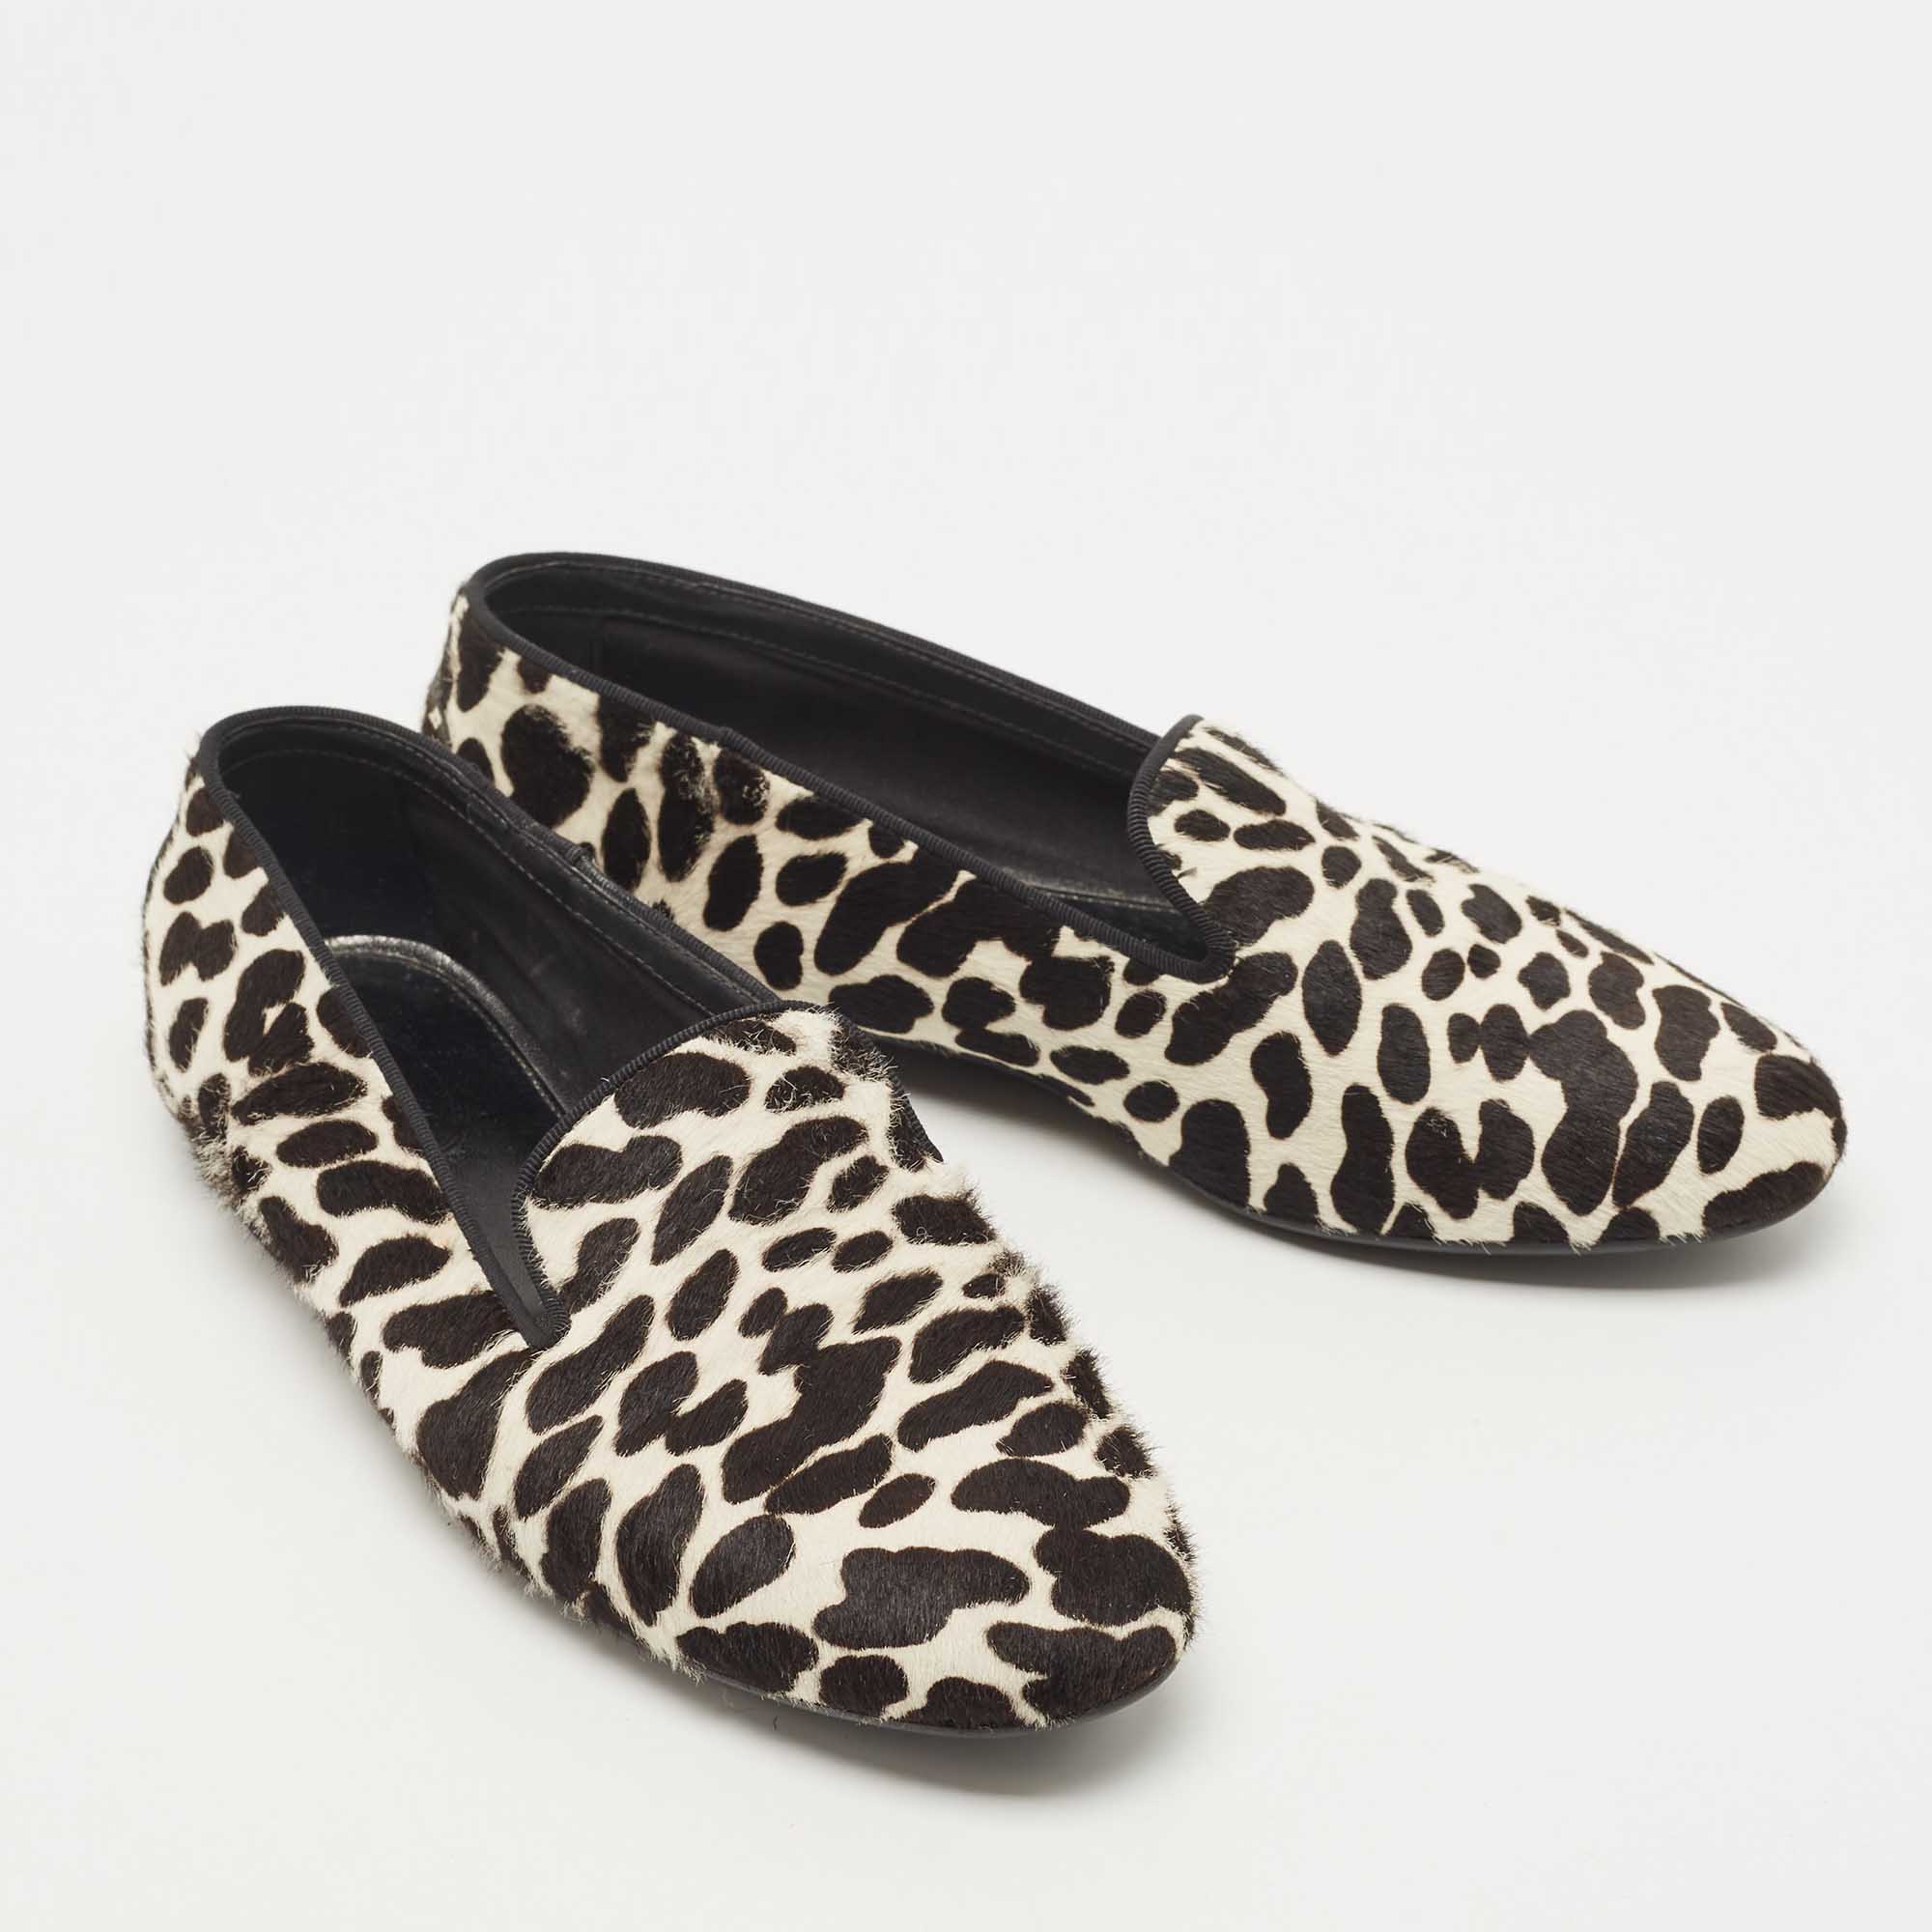 Tod's Black/White Leopard Print Calf Hair Smoking Slippers Size 36.5